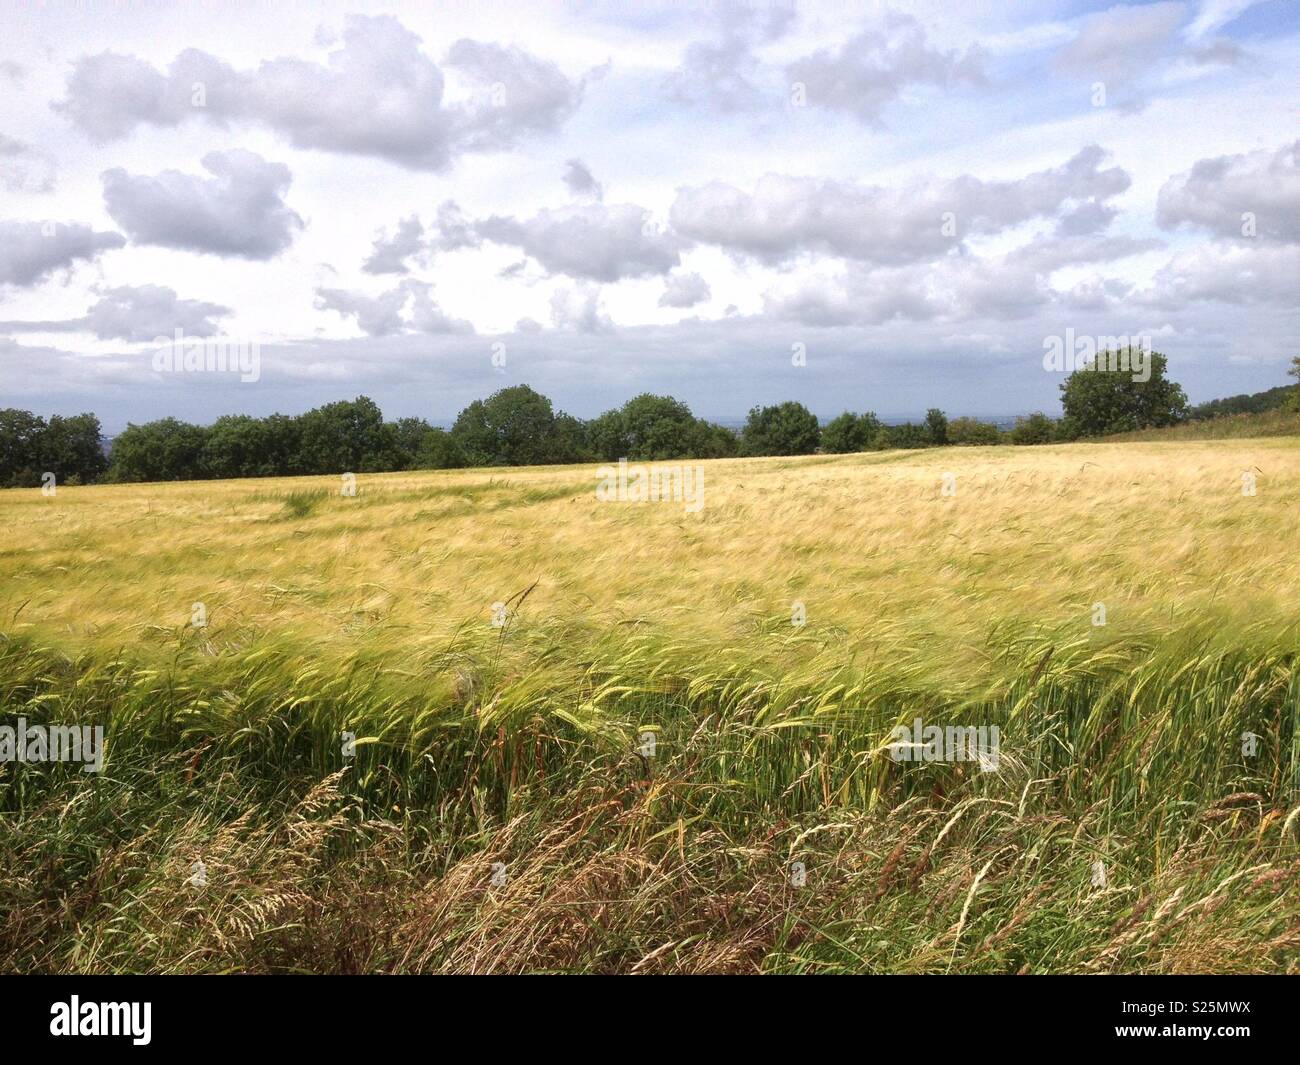 Wind-blown yellow barley field under clouds Stock Photo